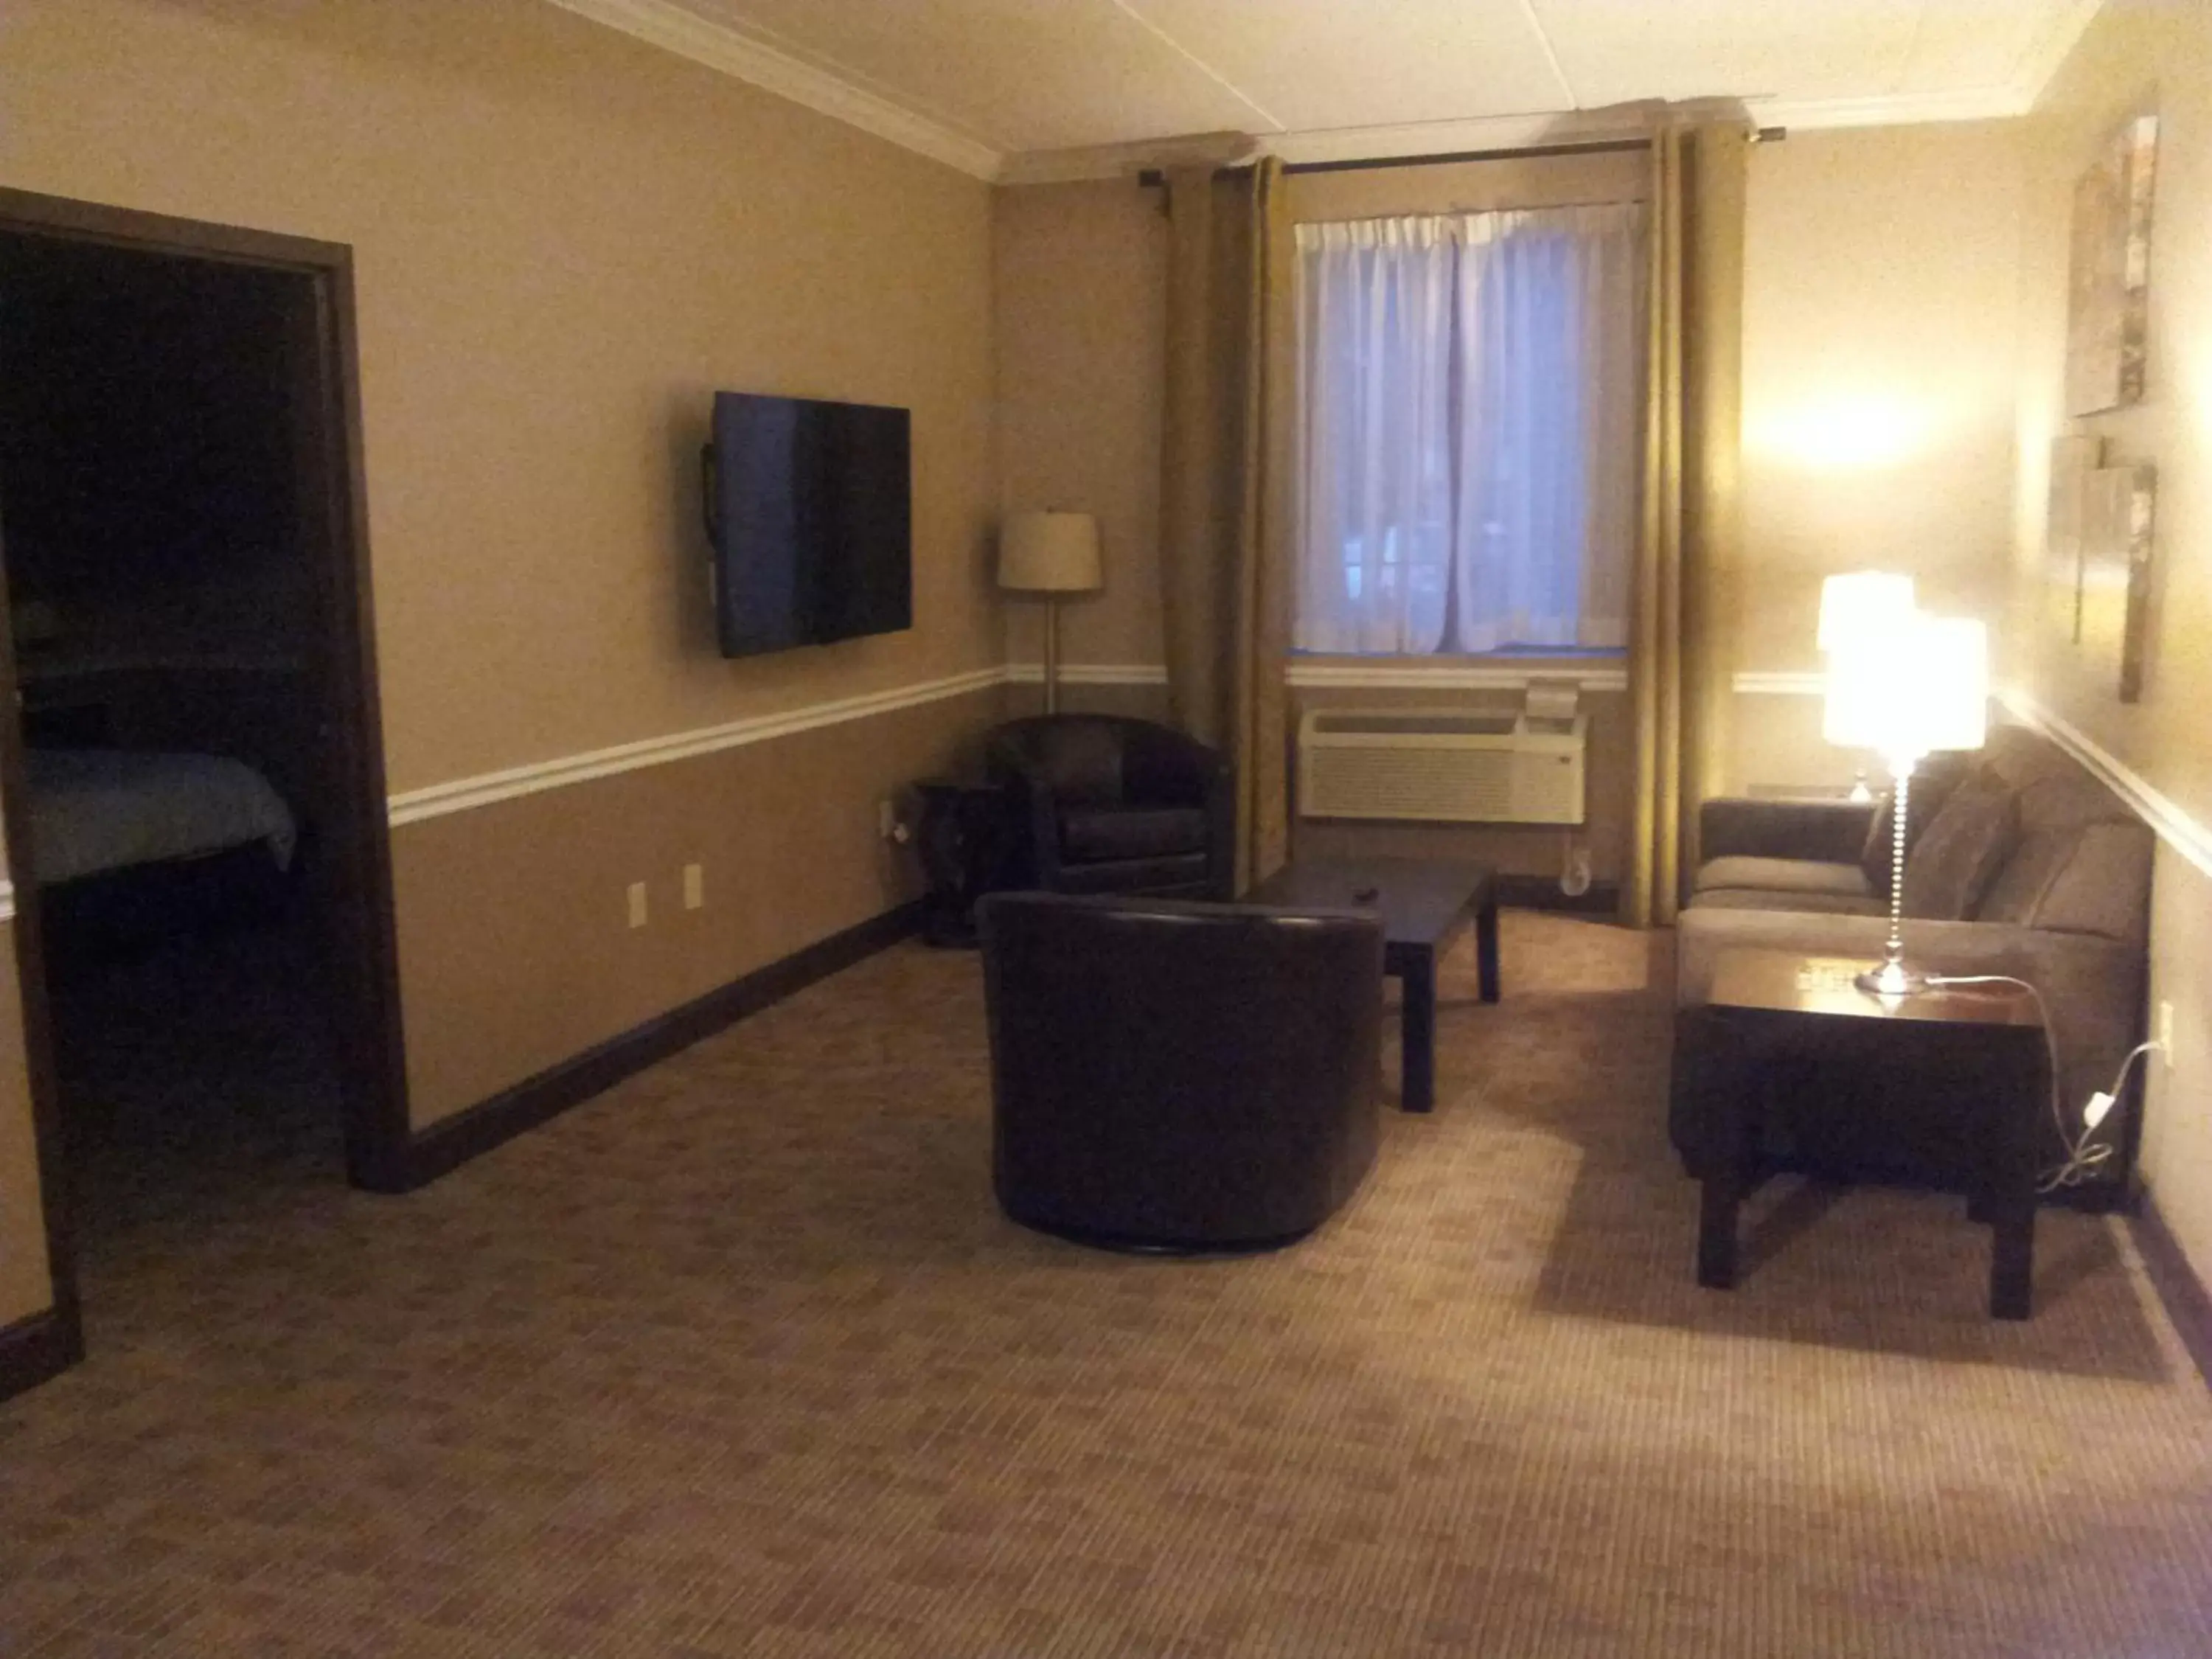 Deluxe Suite in Belvedere Inn Schenectady - Albany